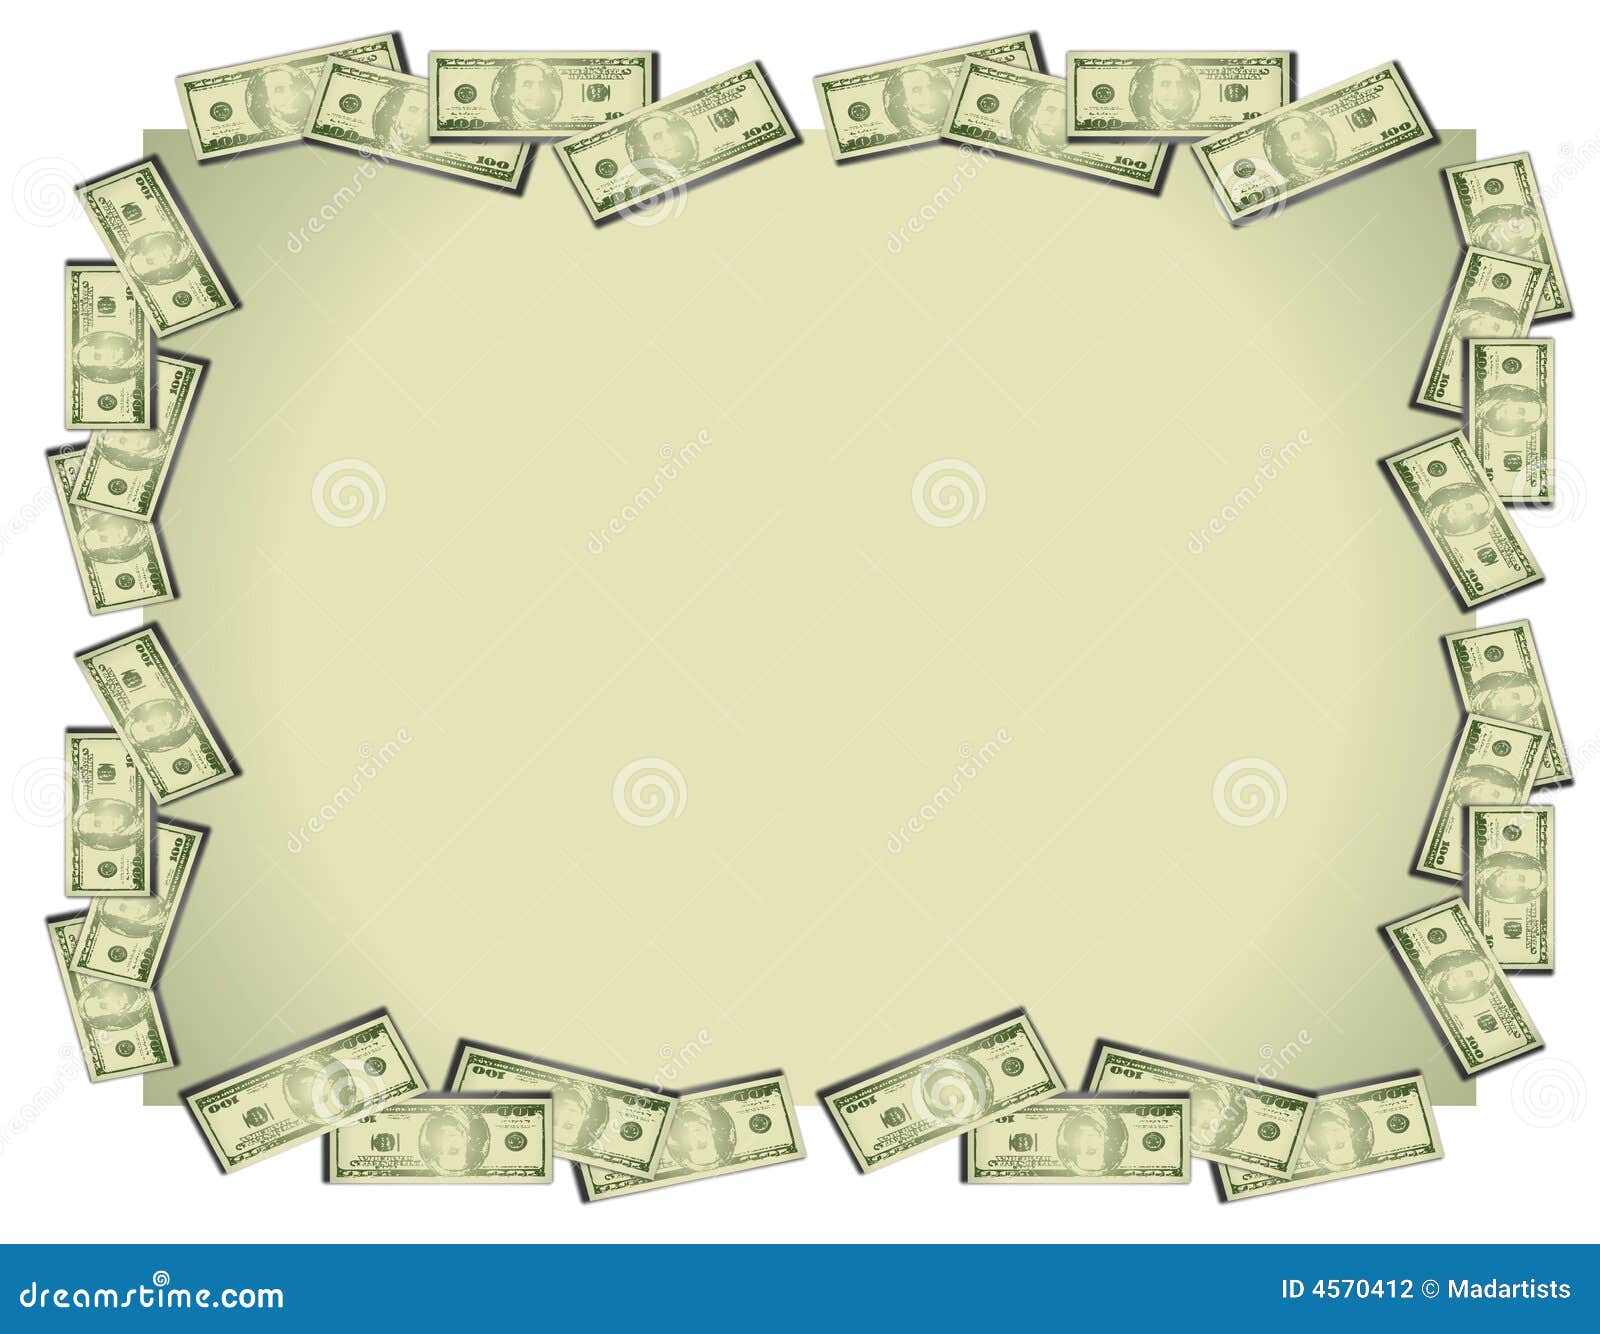 money background clipart - photo #4